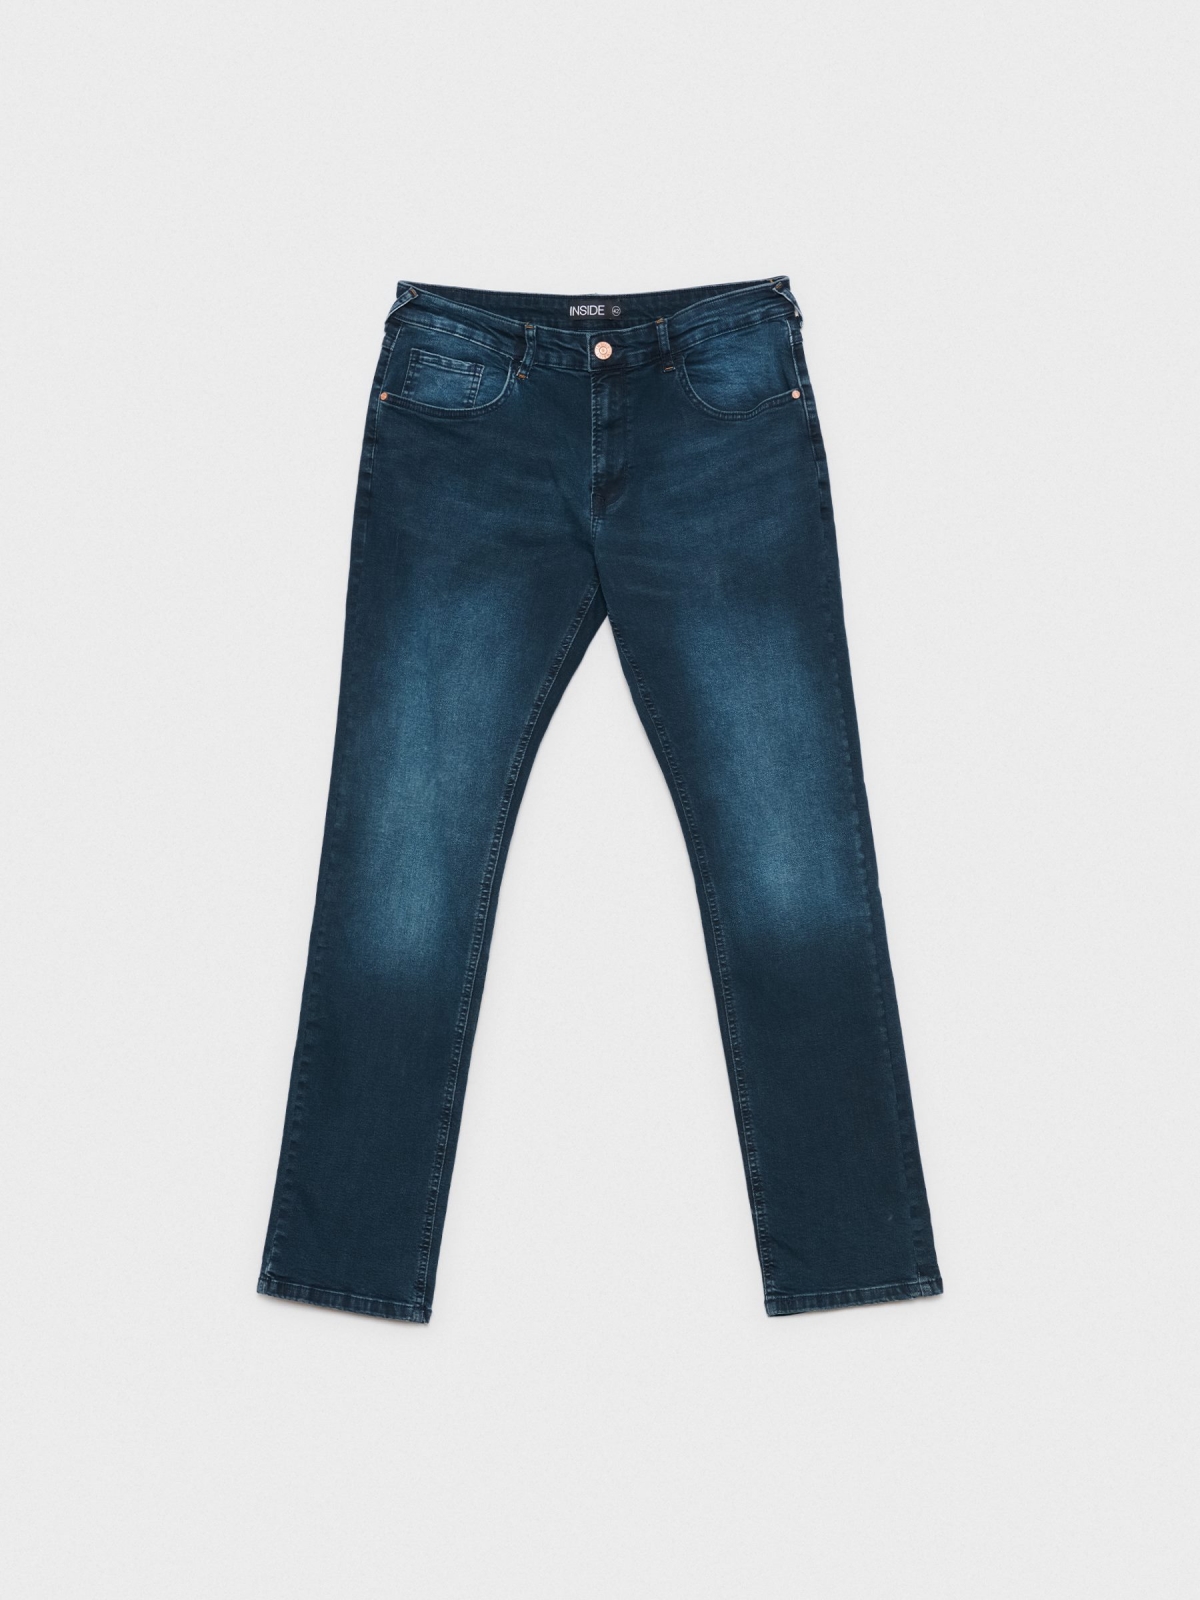  Basic jeans blue